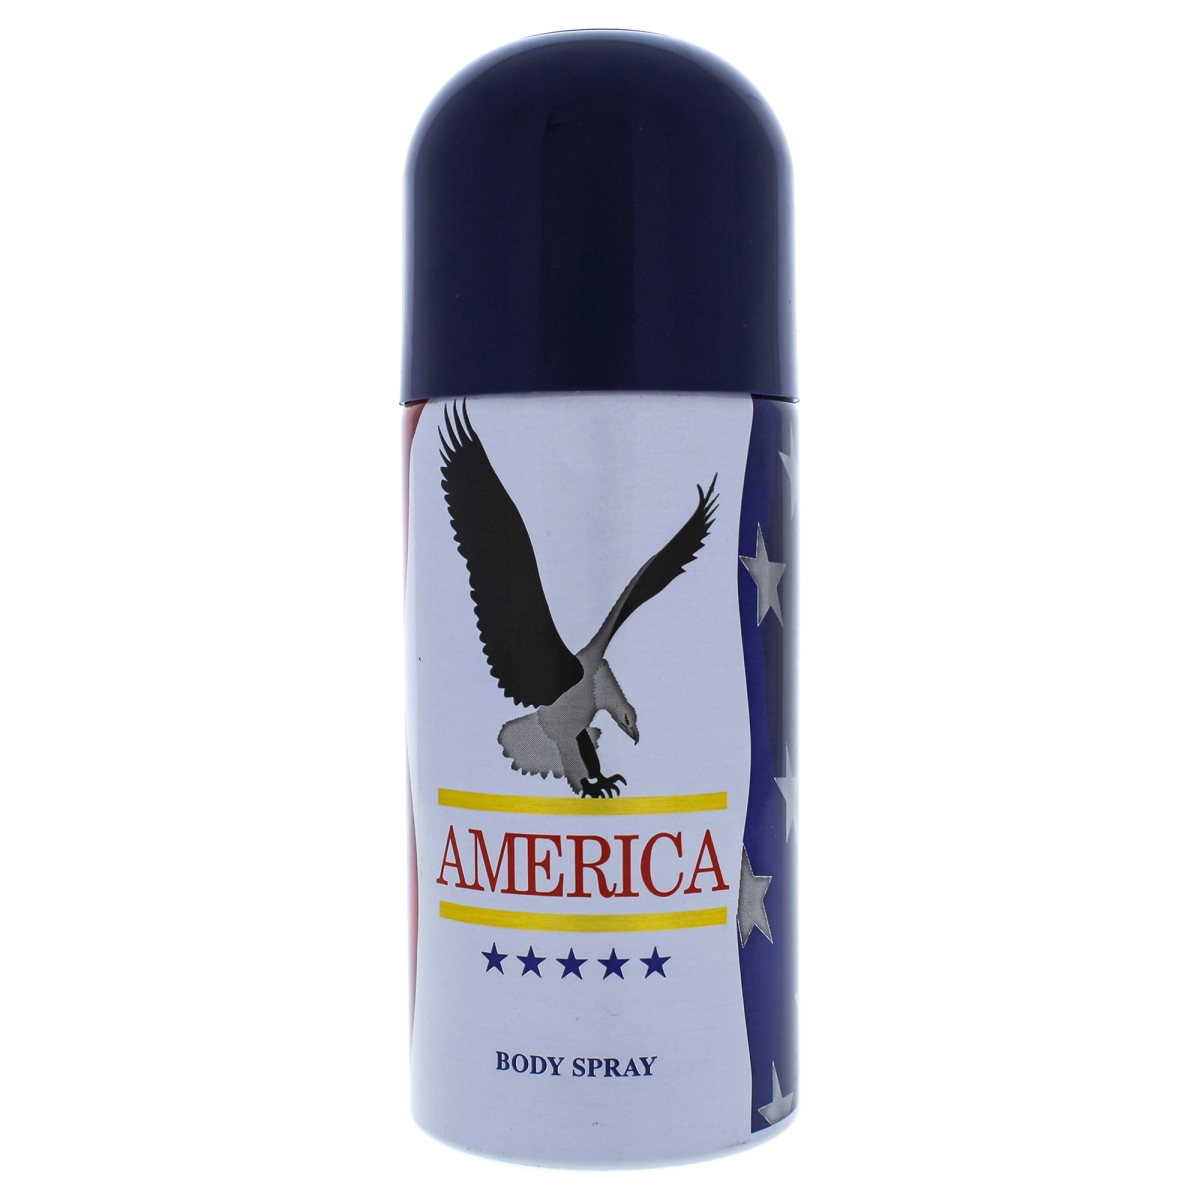 I0088751 America Body Spray For Men - 5.1 Oz